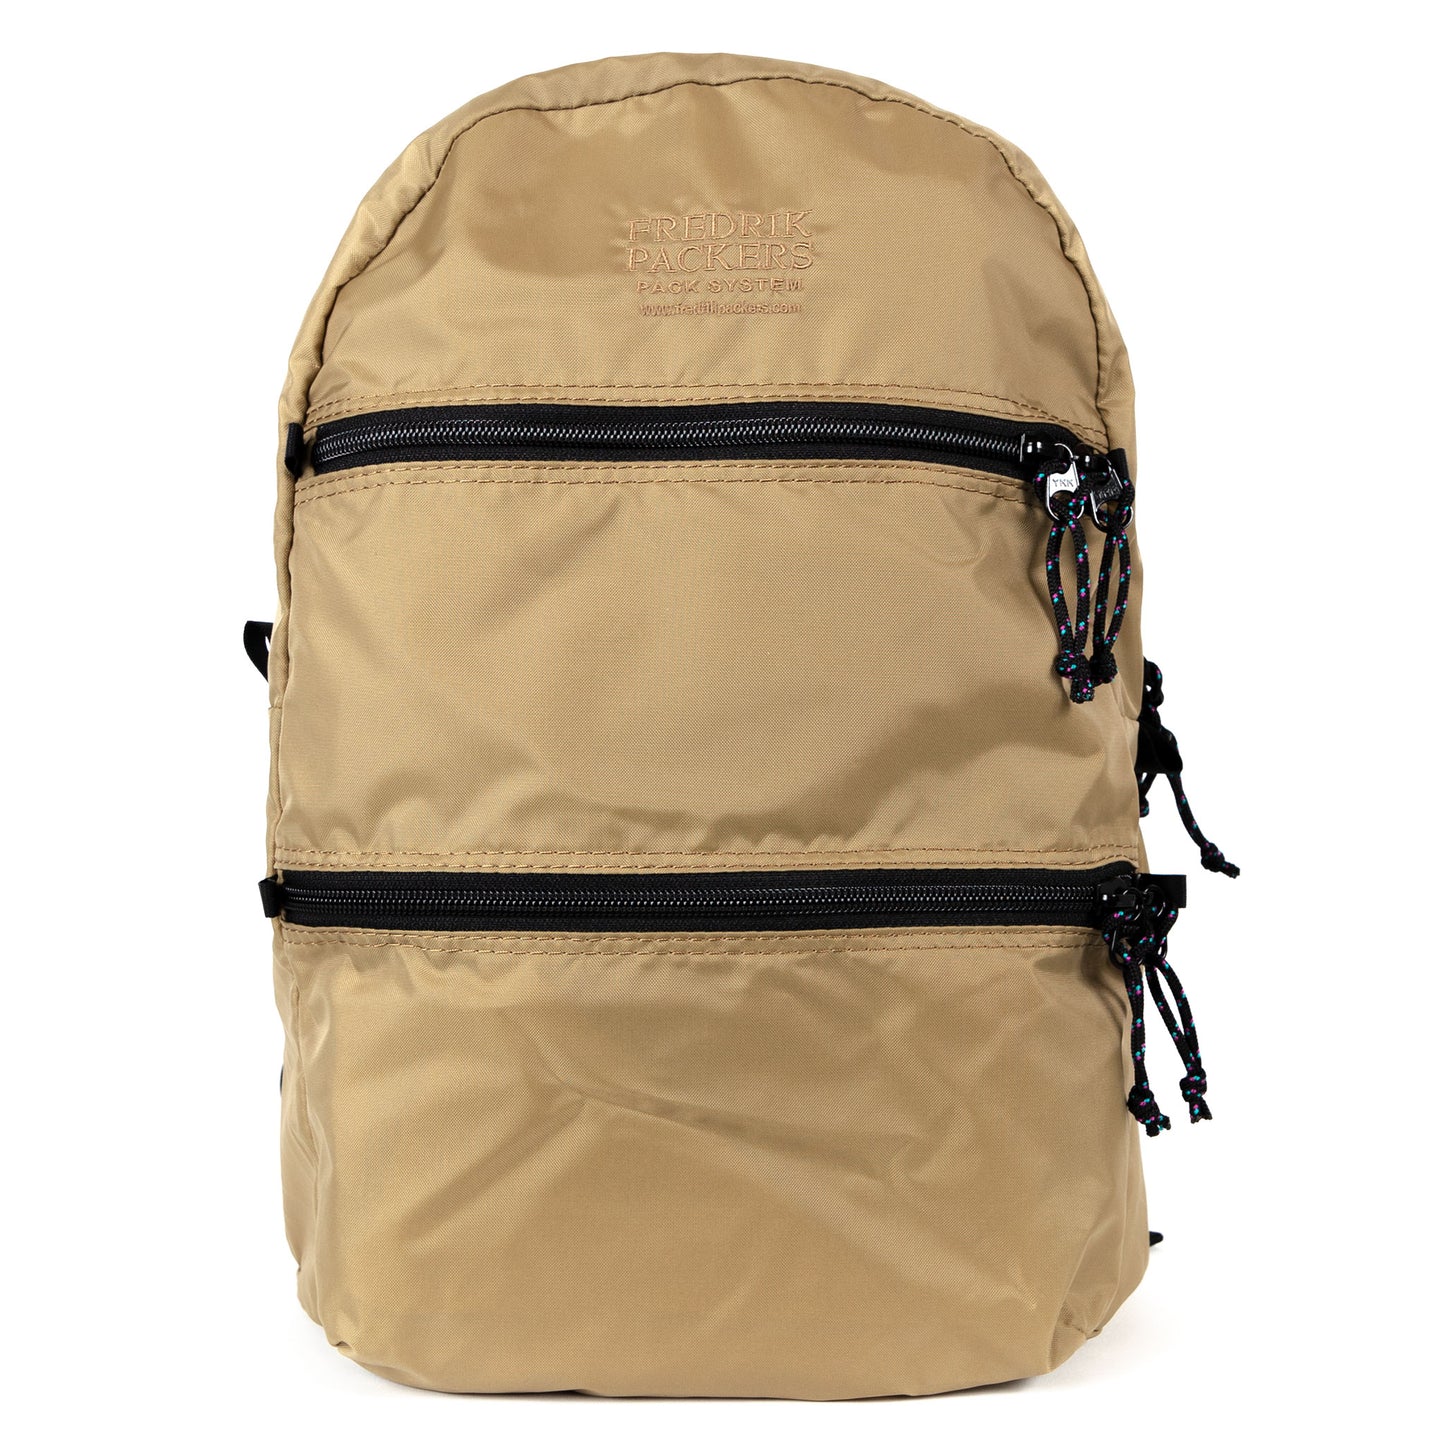 fredrik packers double zip backpack in kahki